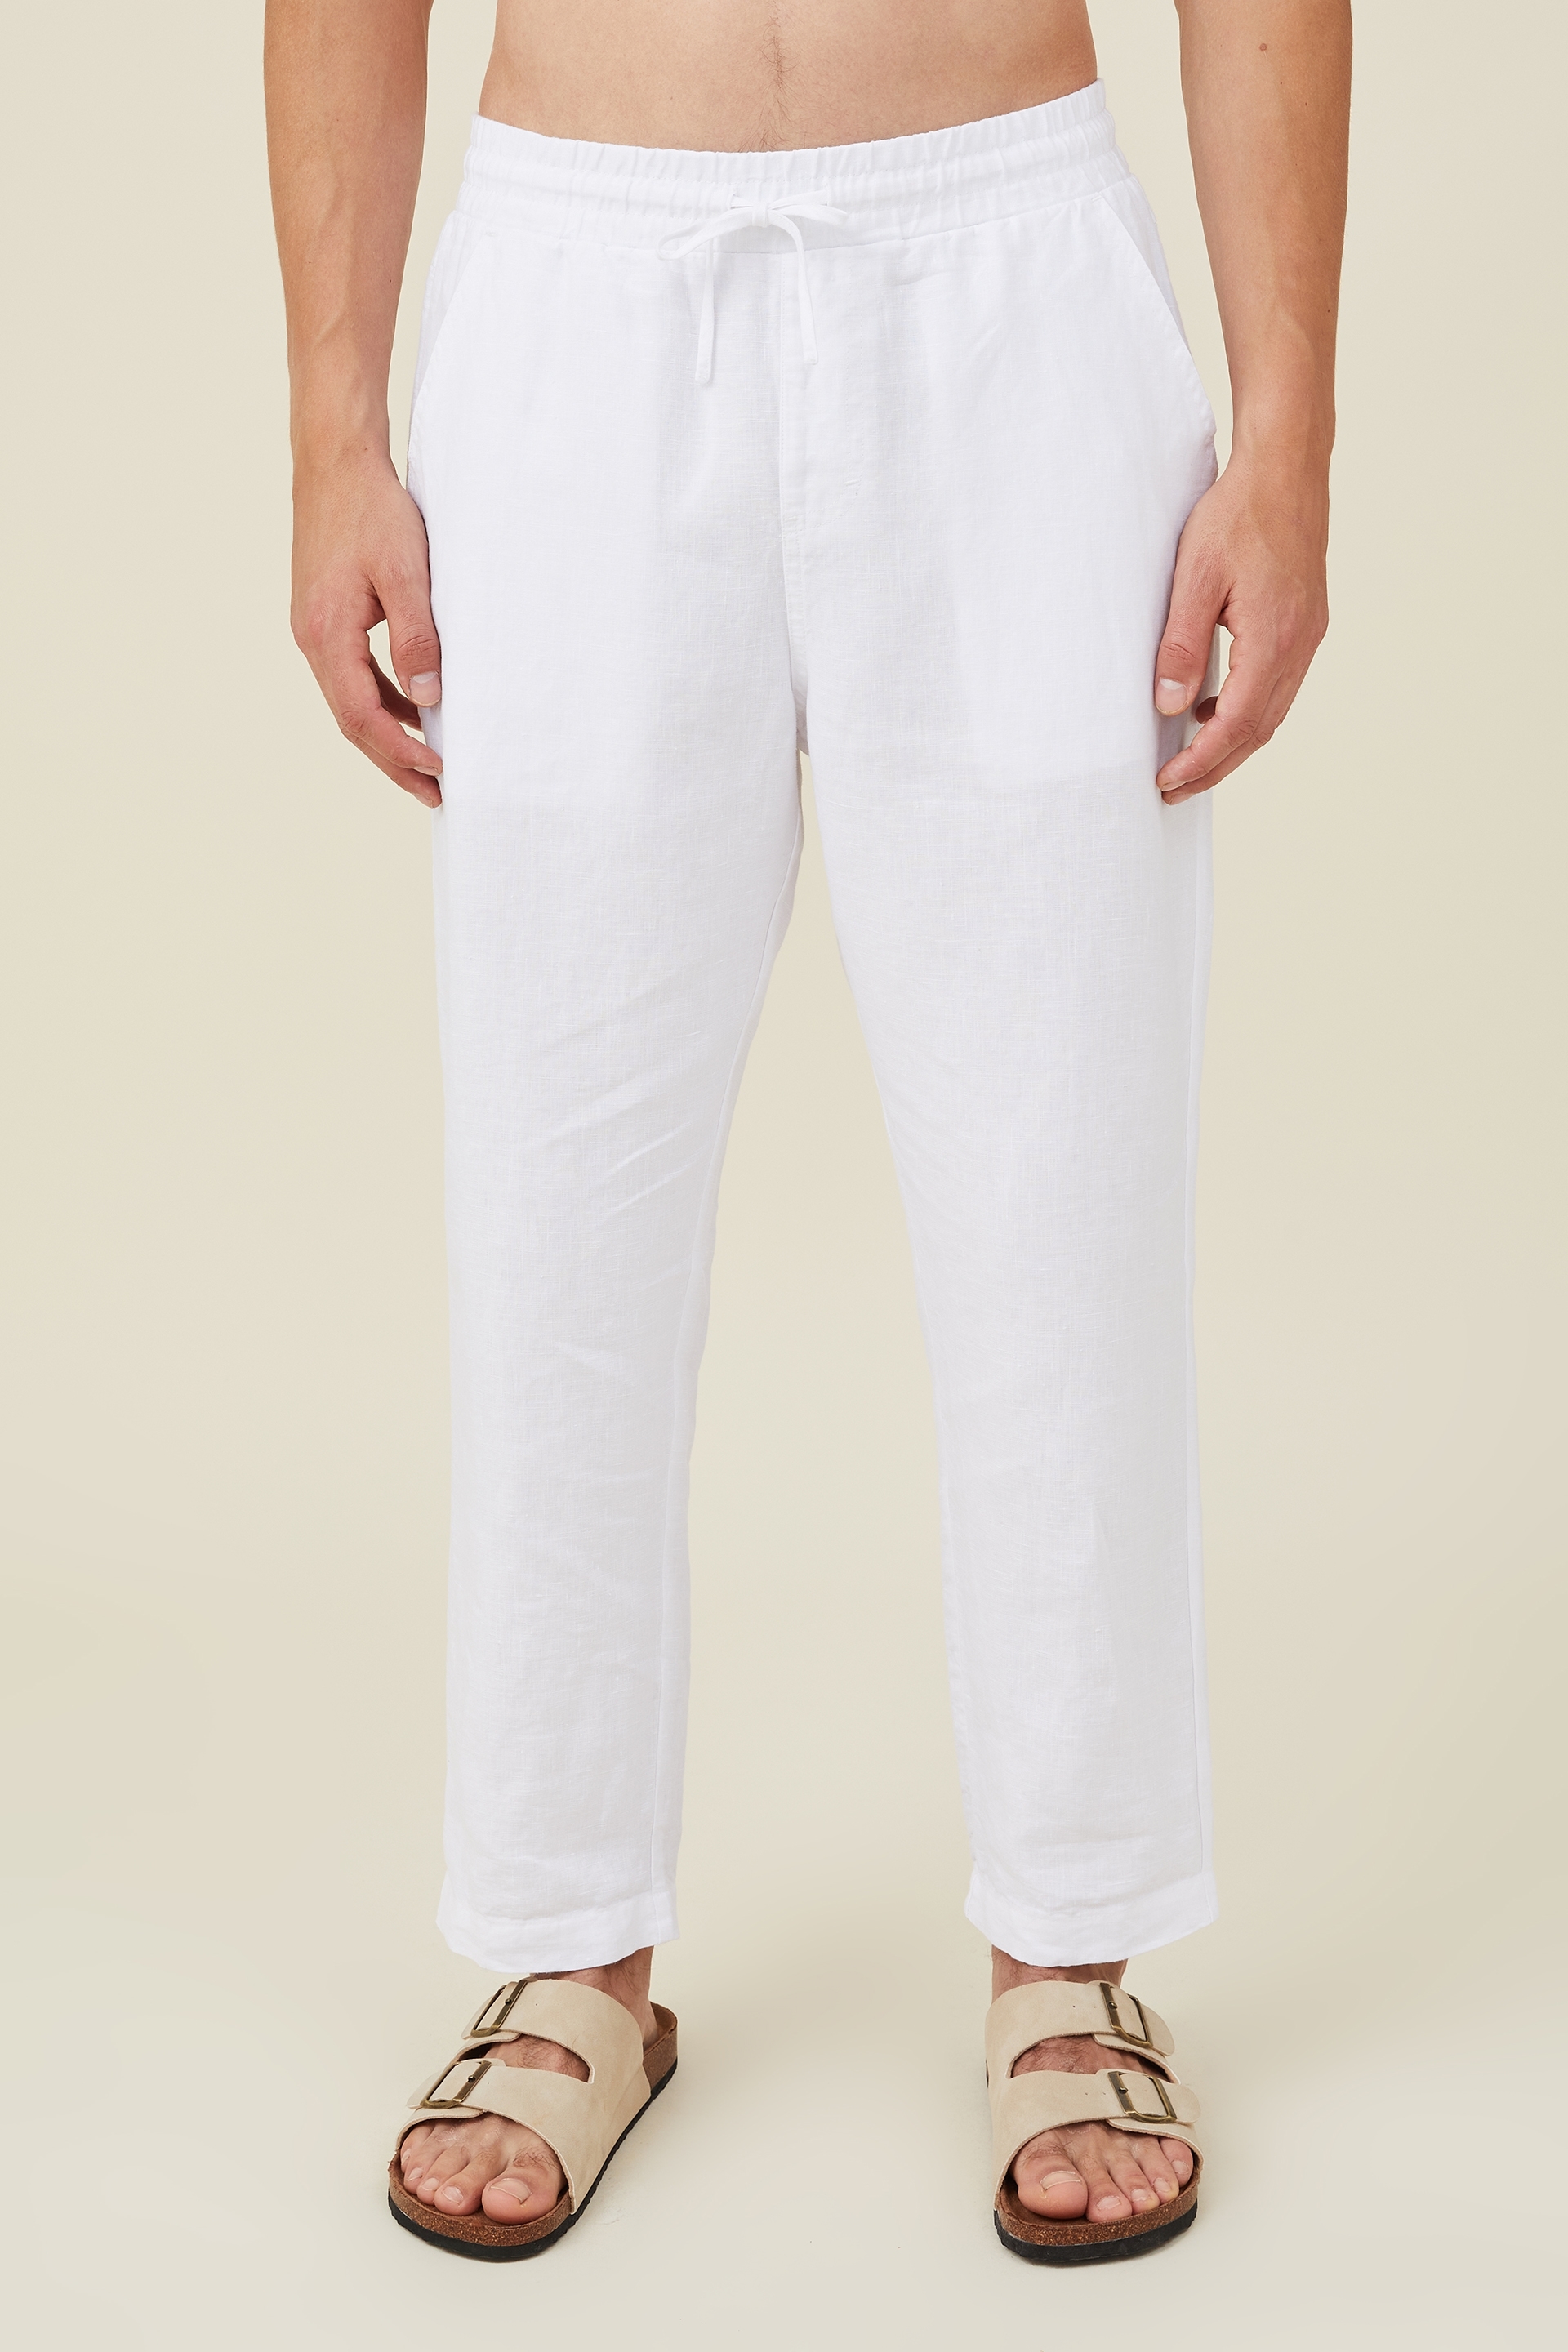 Mens White Linen Pants, Mens White Pants